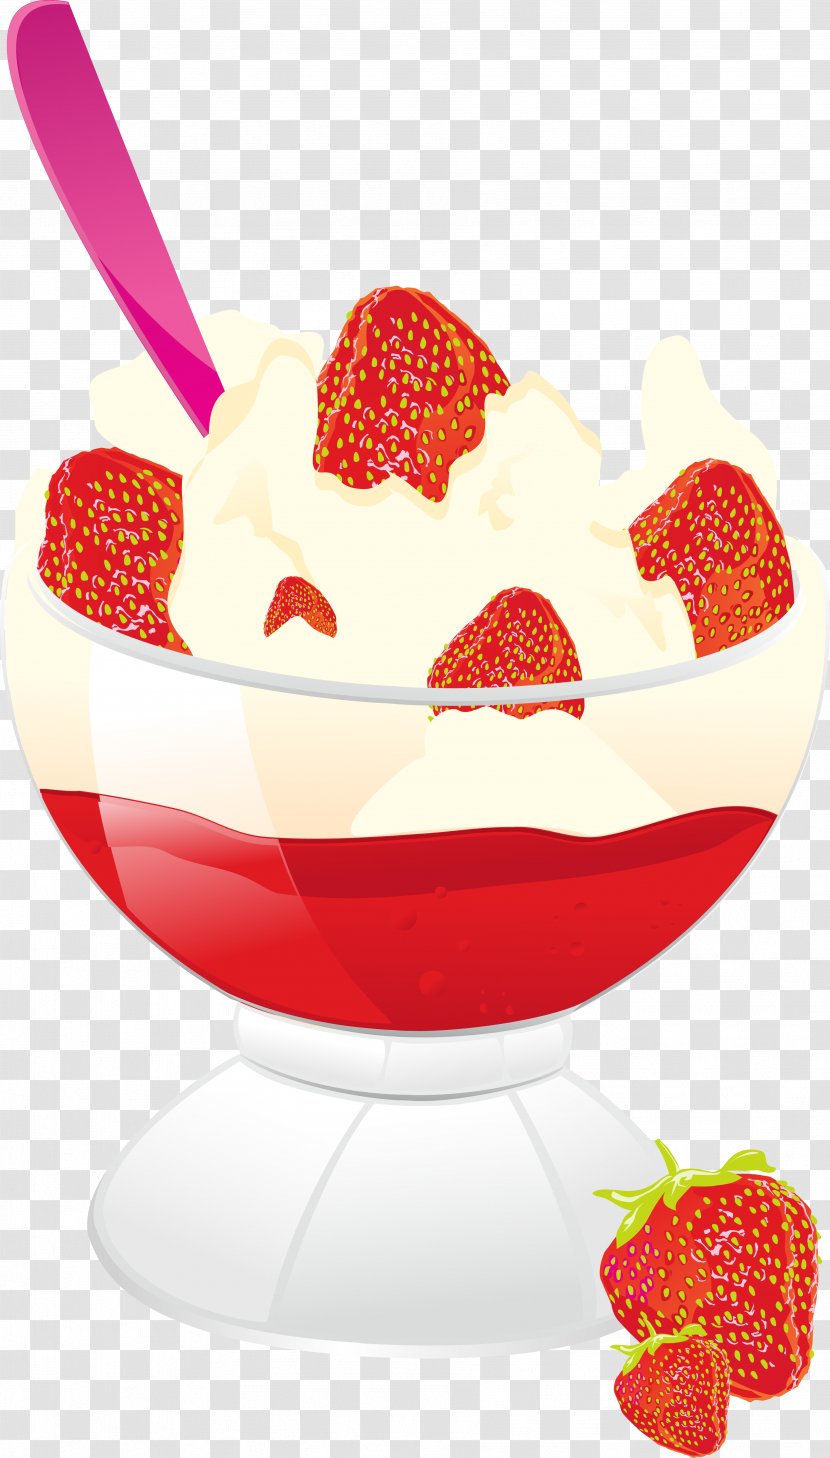 Ice Cream Sundae Smoothie Milkshake Frozen Yogurt - Garnish - Hand Painted Strawberry Pudding Cup Transparent PNG